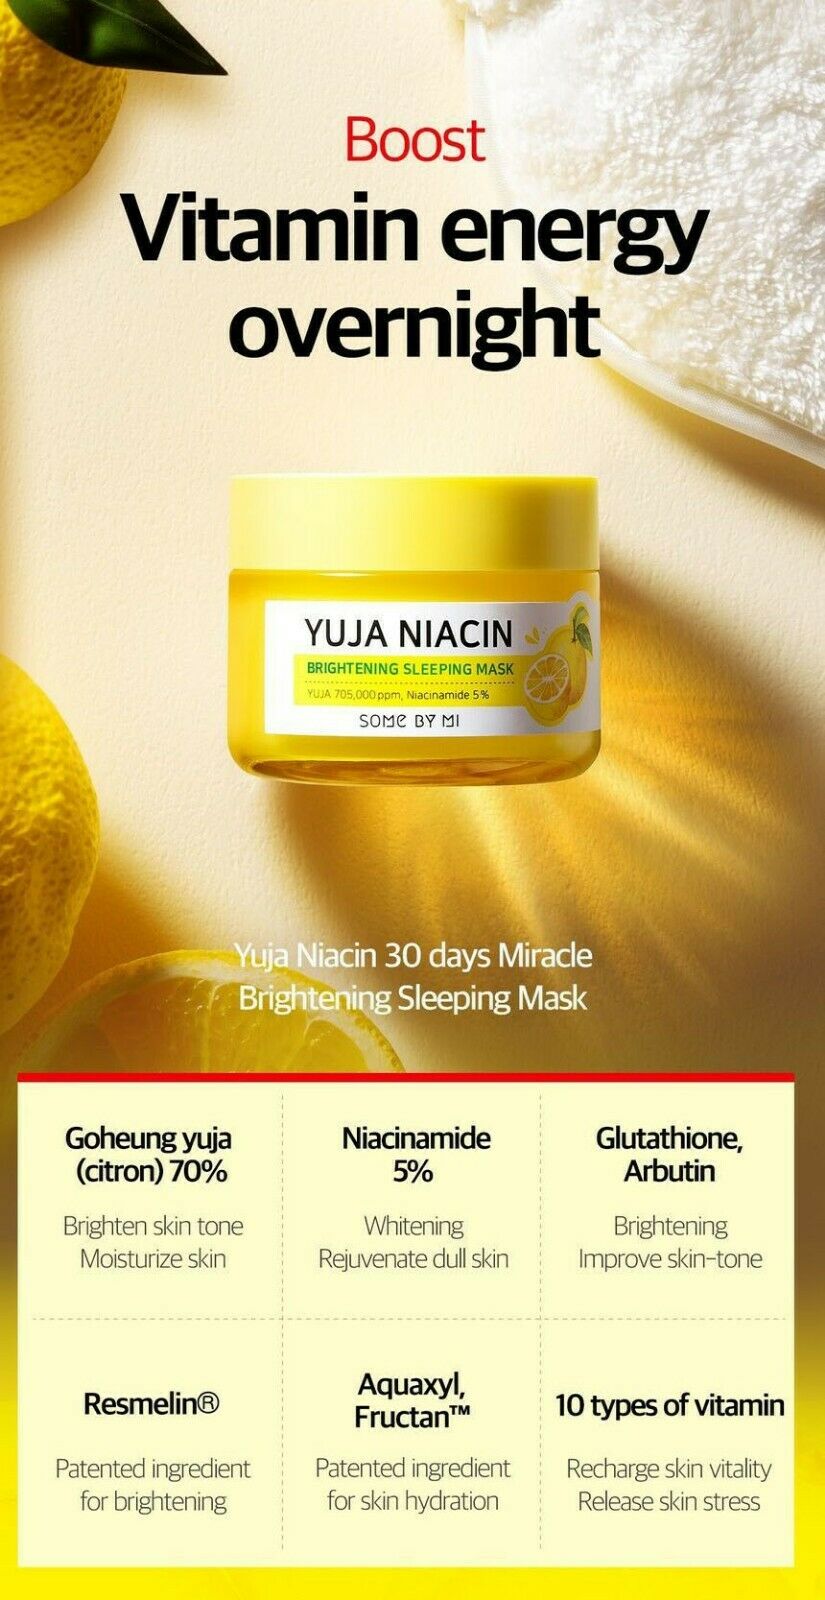 SOME BY MI Yuja brightening and moisturizing sleeping mask